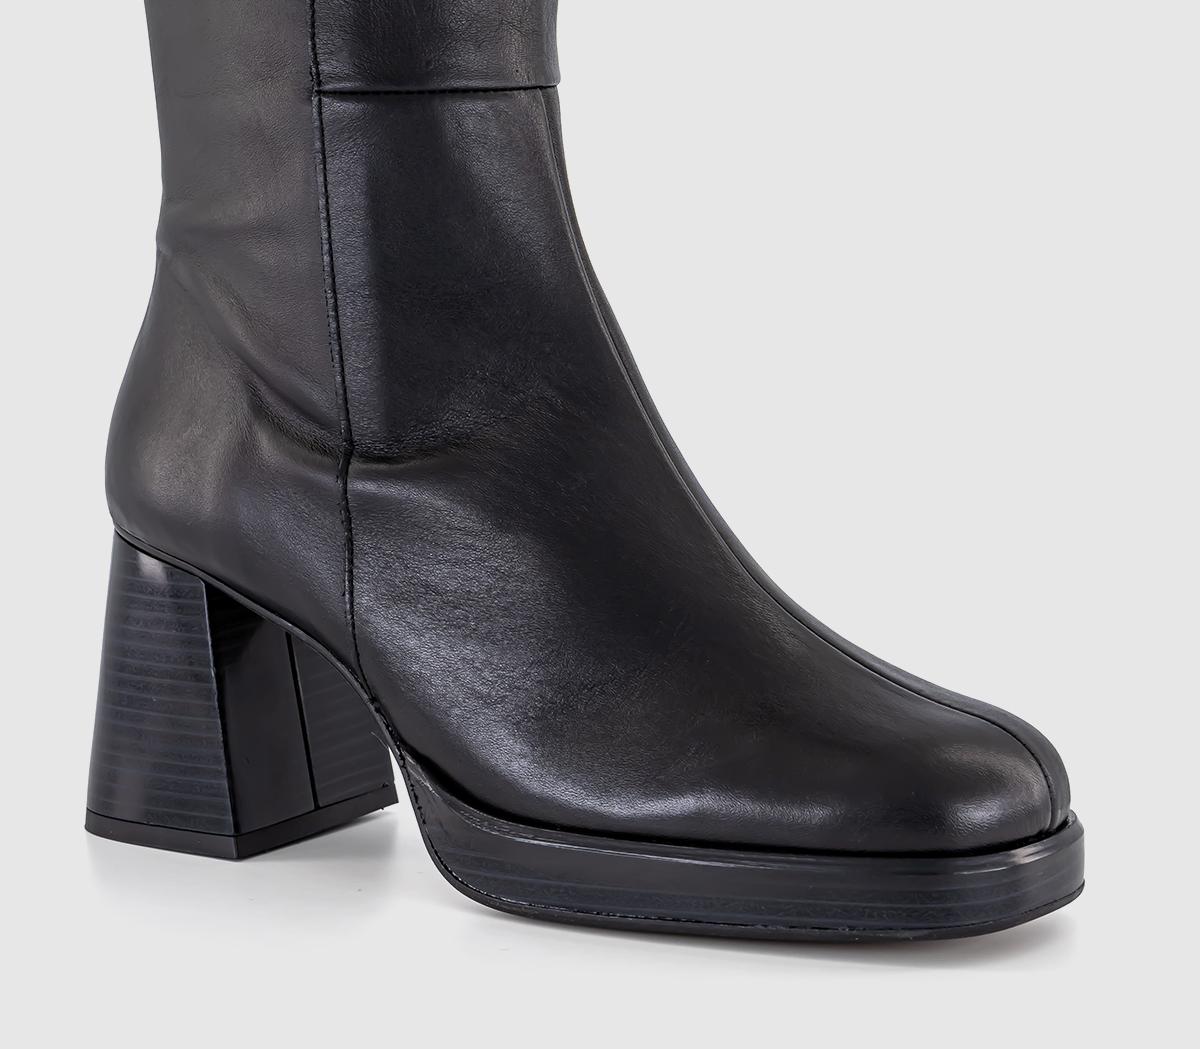 OFFICE Klara Platform Heeled Knee Boots Black Leather - Knee High Boots